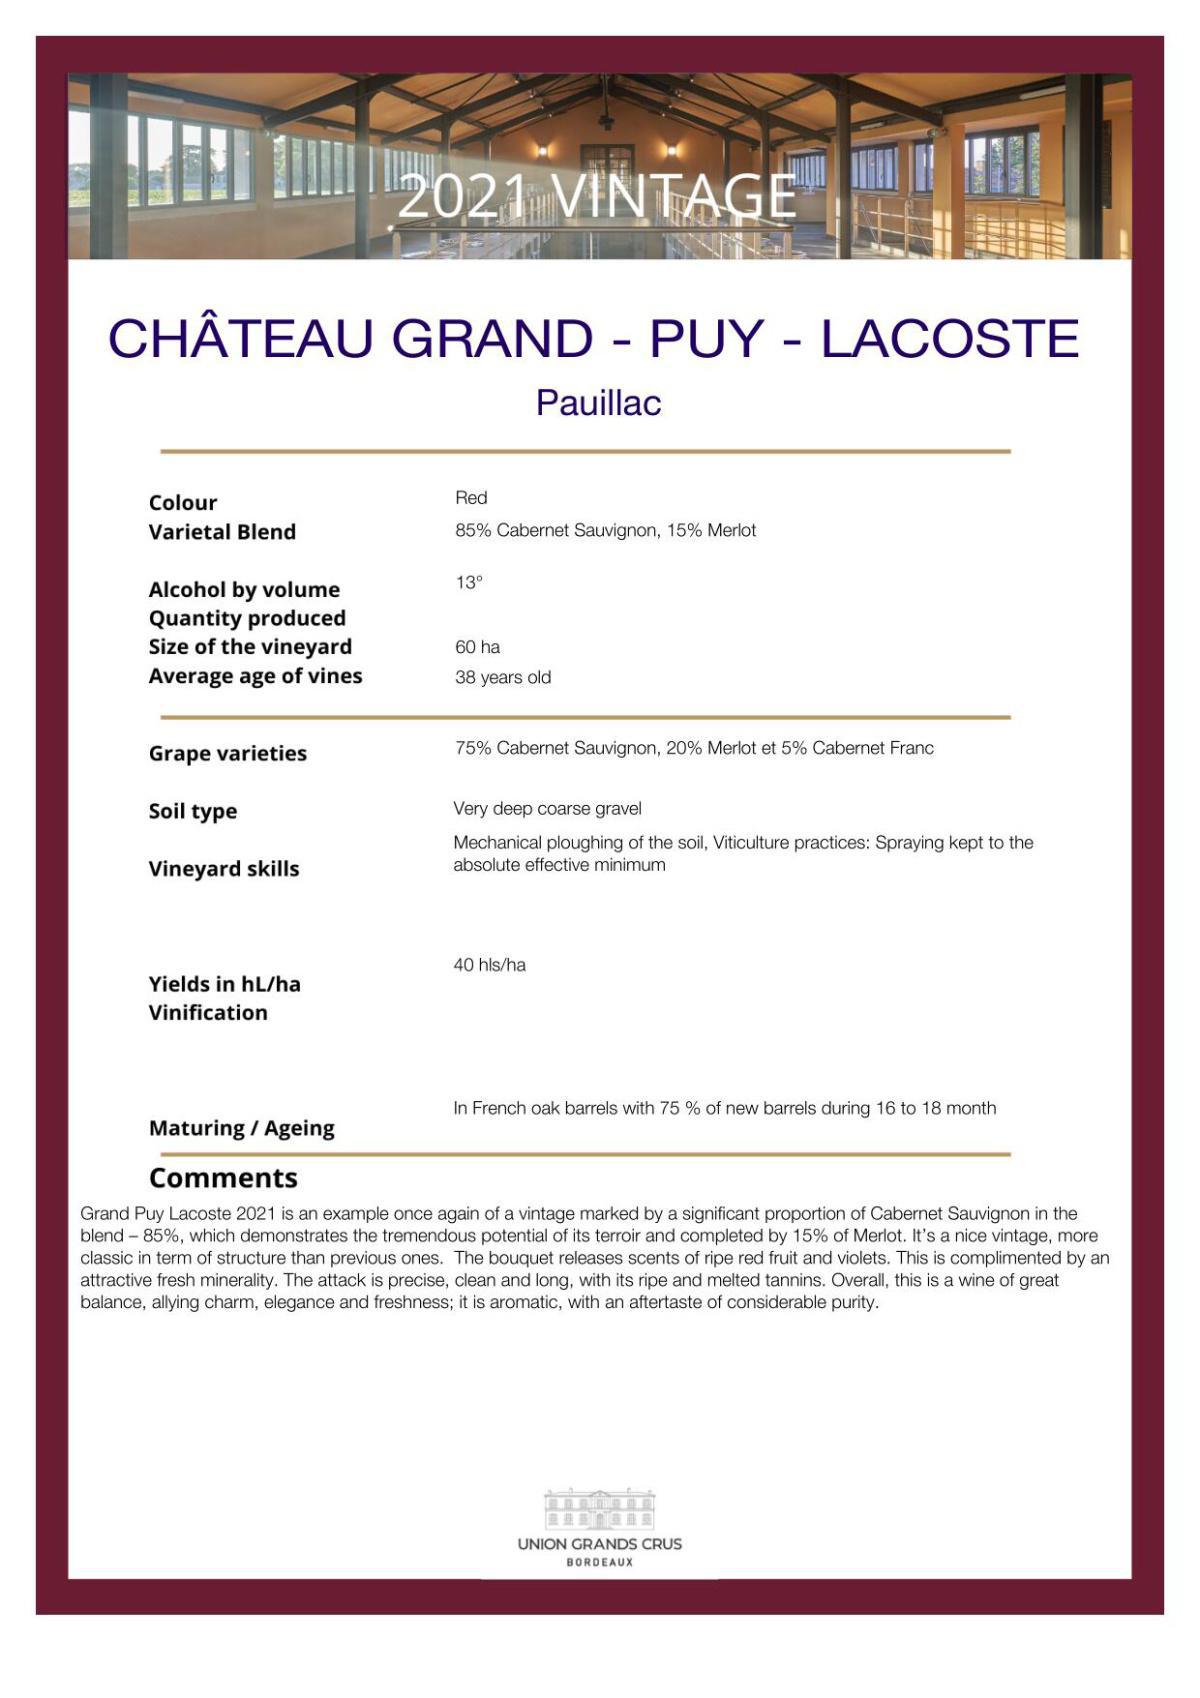 Château Grand - Puy - Lacoste